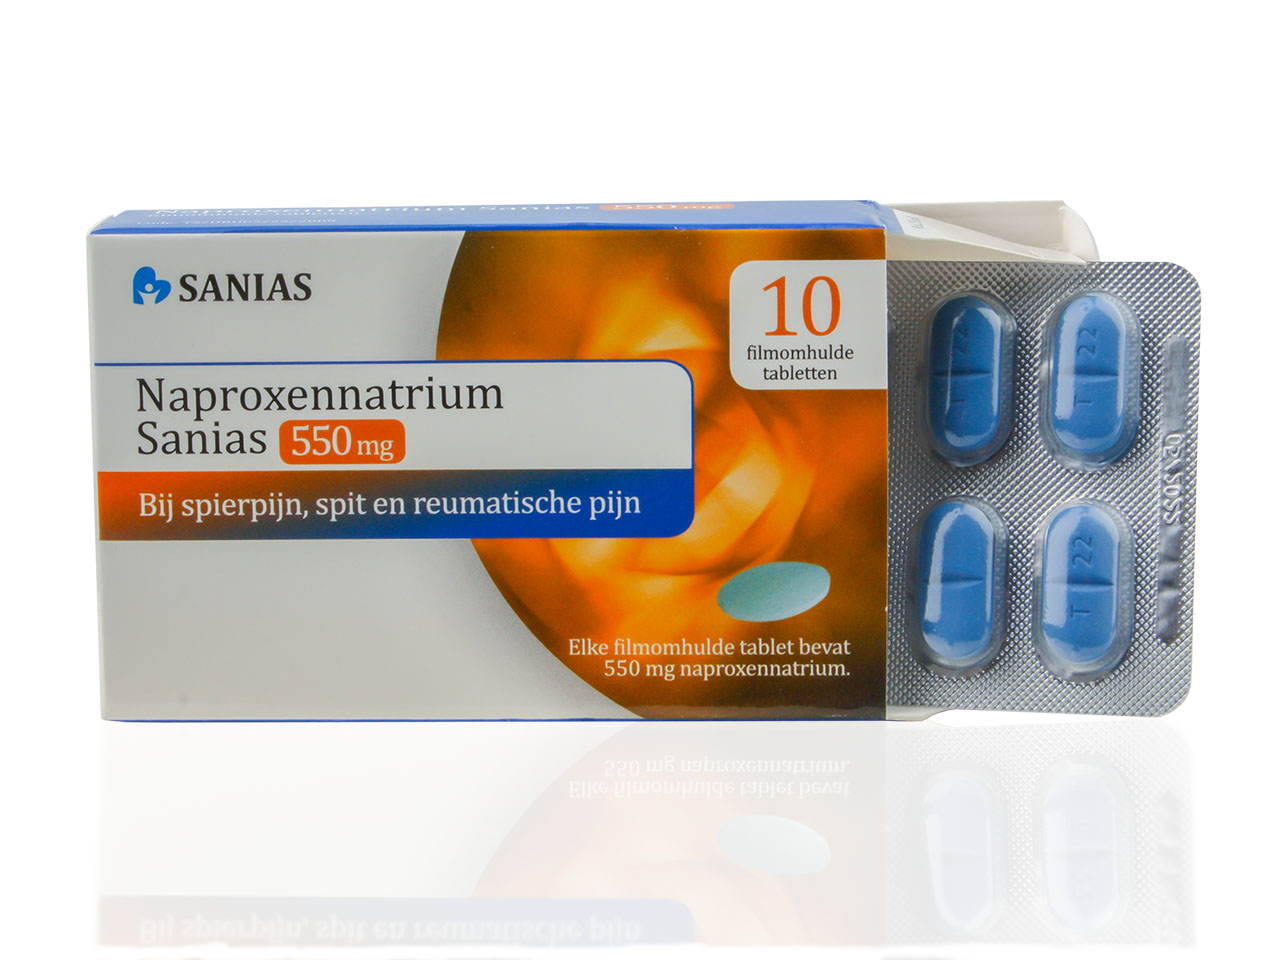 Naproxennatrium Sanias Tablet Filmomhuld 550mg